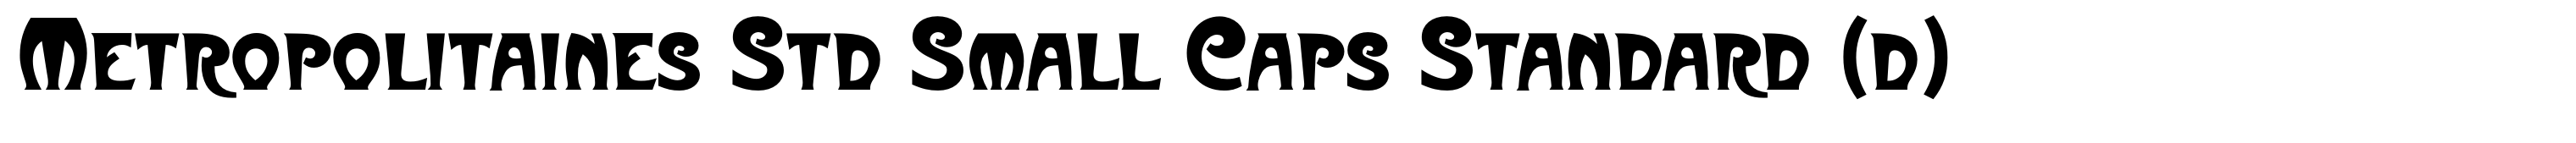 Metropolitaines Std Small Caps Standard (d)